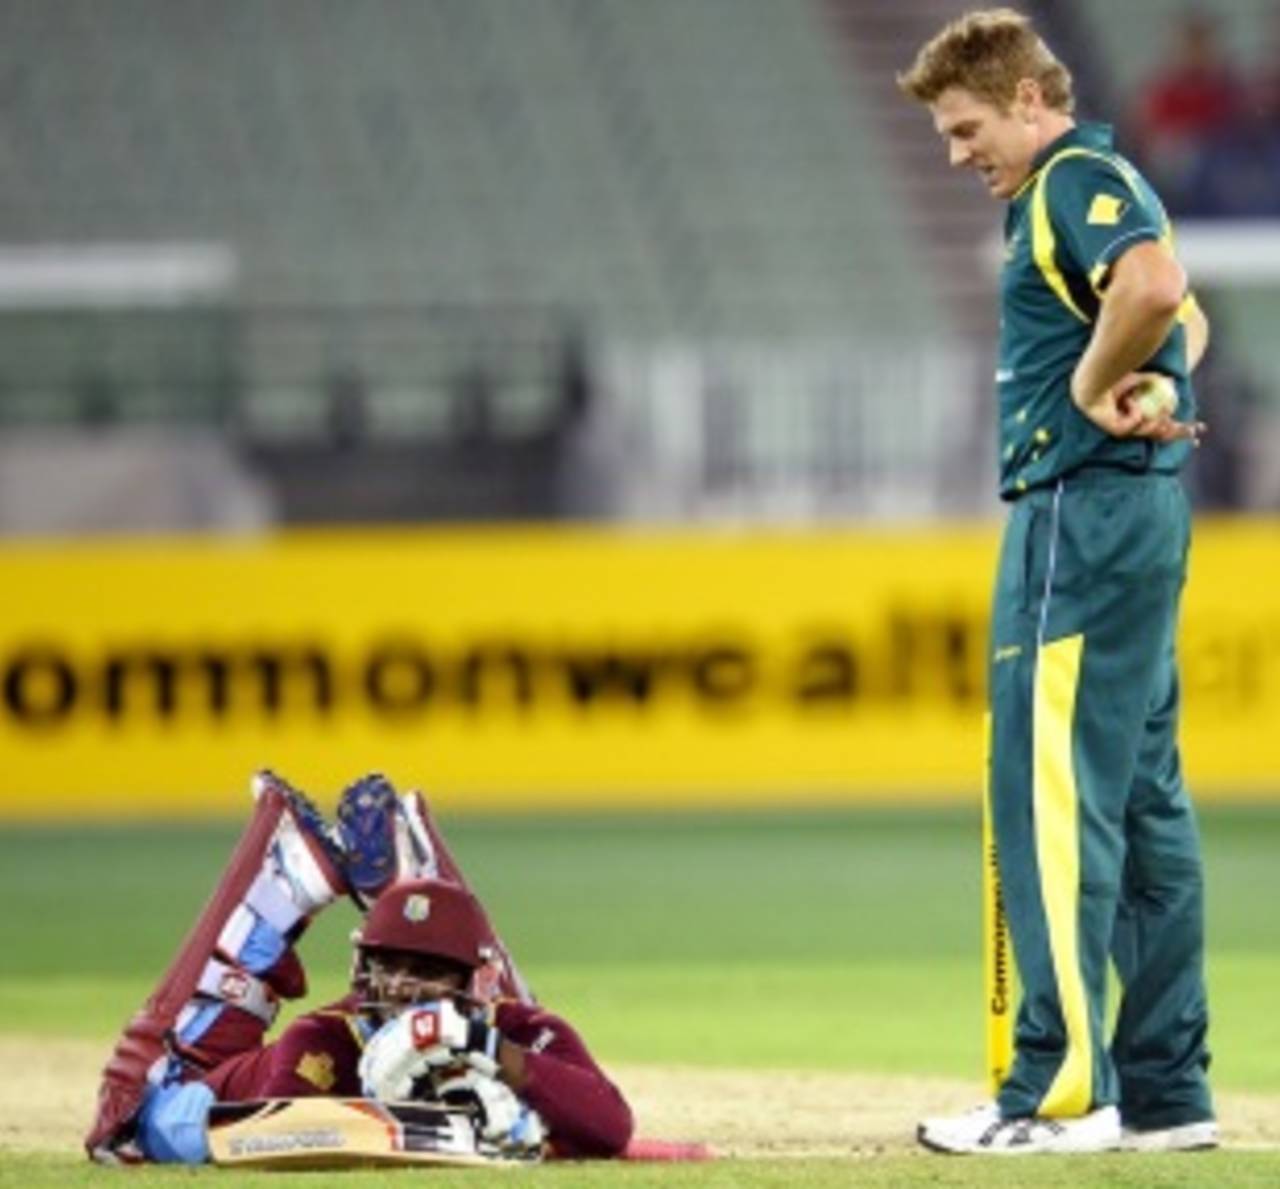 James Faulkner looks down on Devon Thomas after running him out, Australia v West Indies, 5th ODI, Melbourne, February 10, 2013